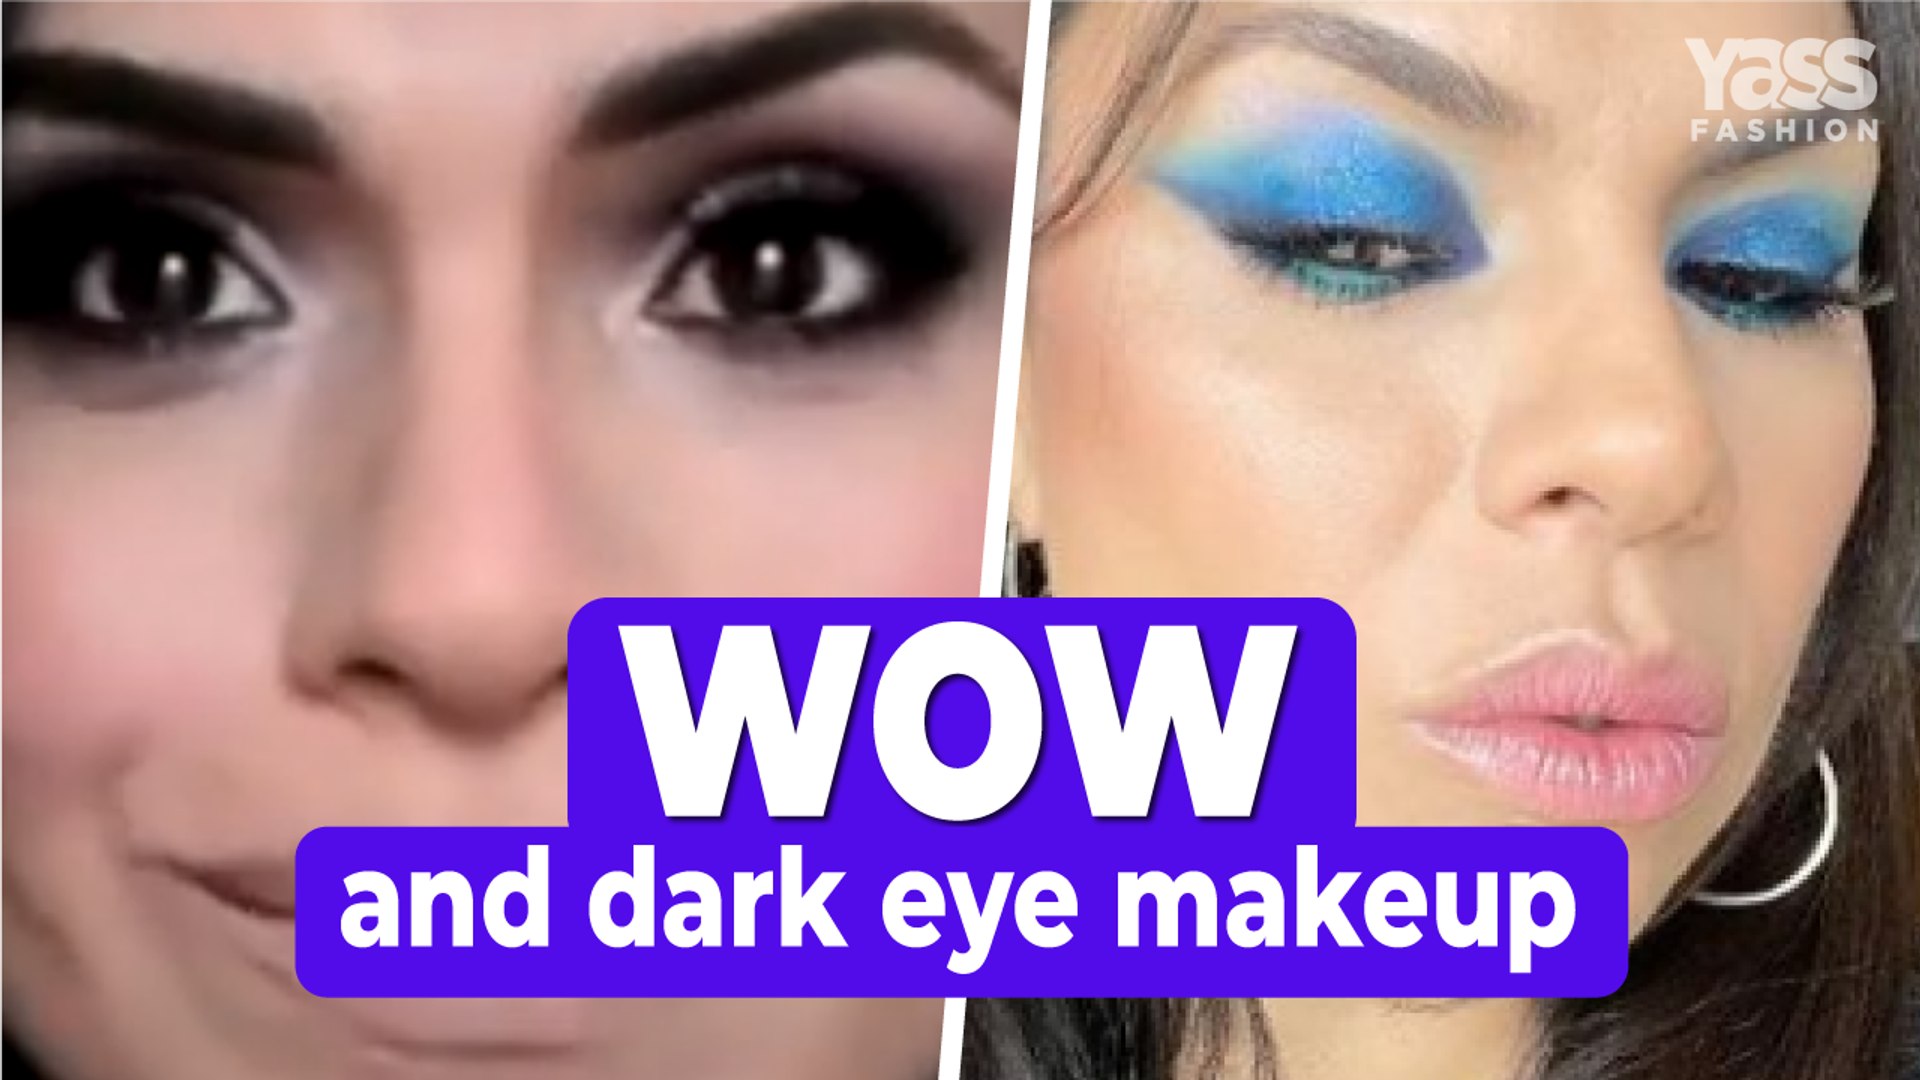 Wow and dark eye makeup